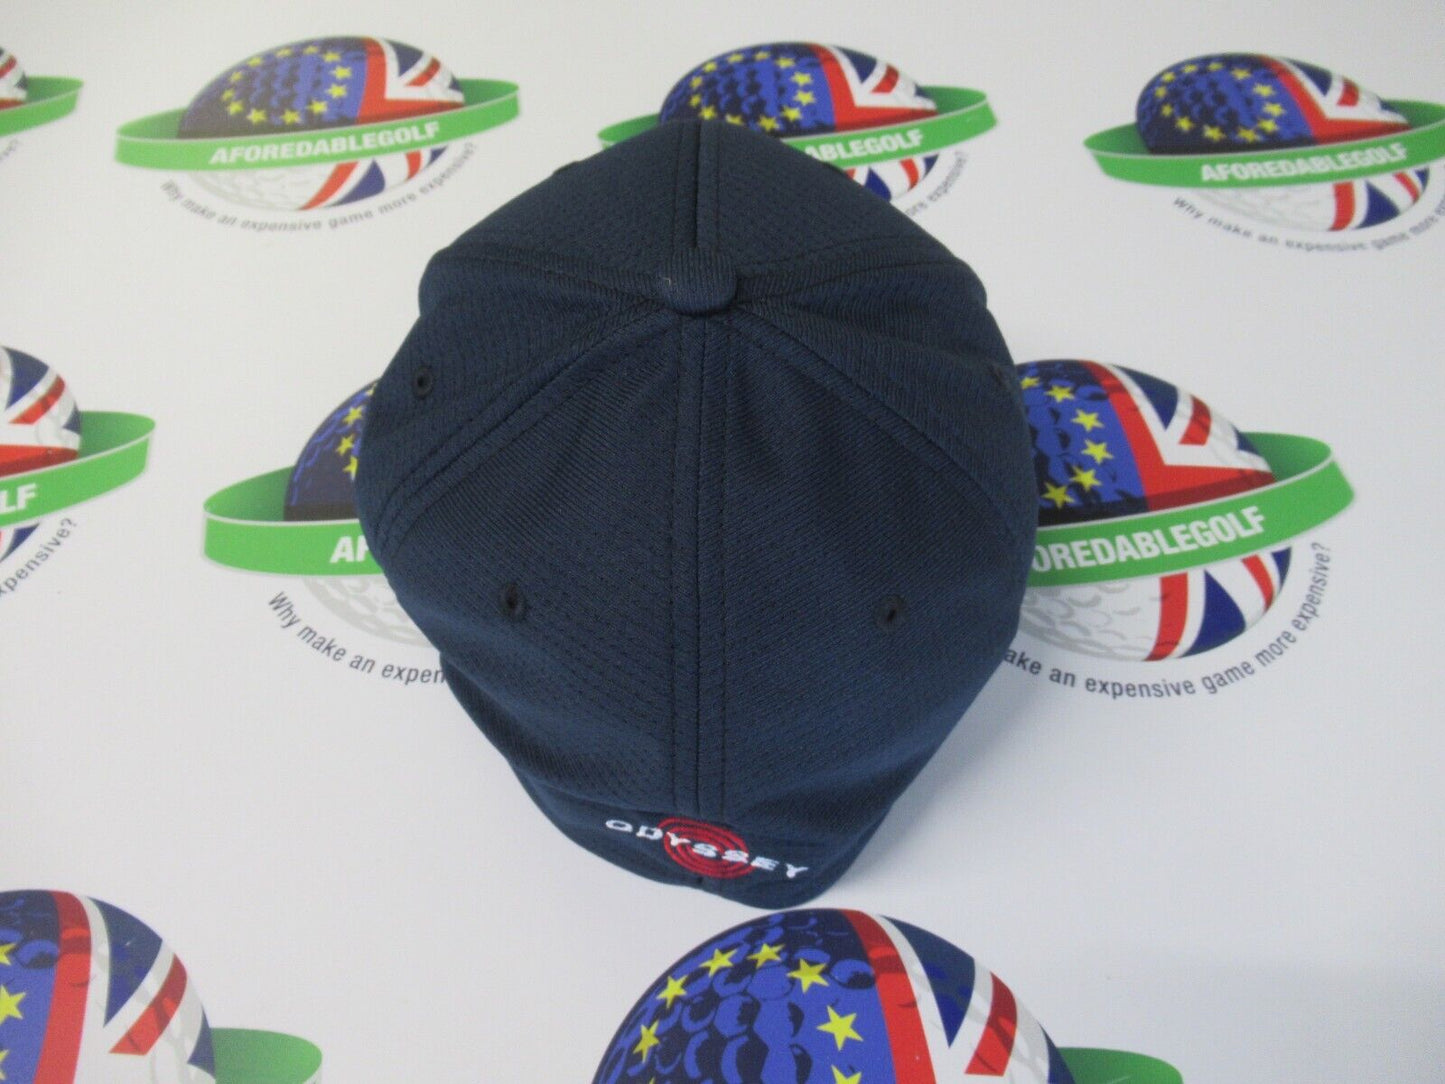 callaway golf flexfit navy cap size large/xl mavrik apex chrome soft odyssey